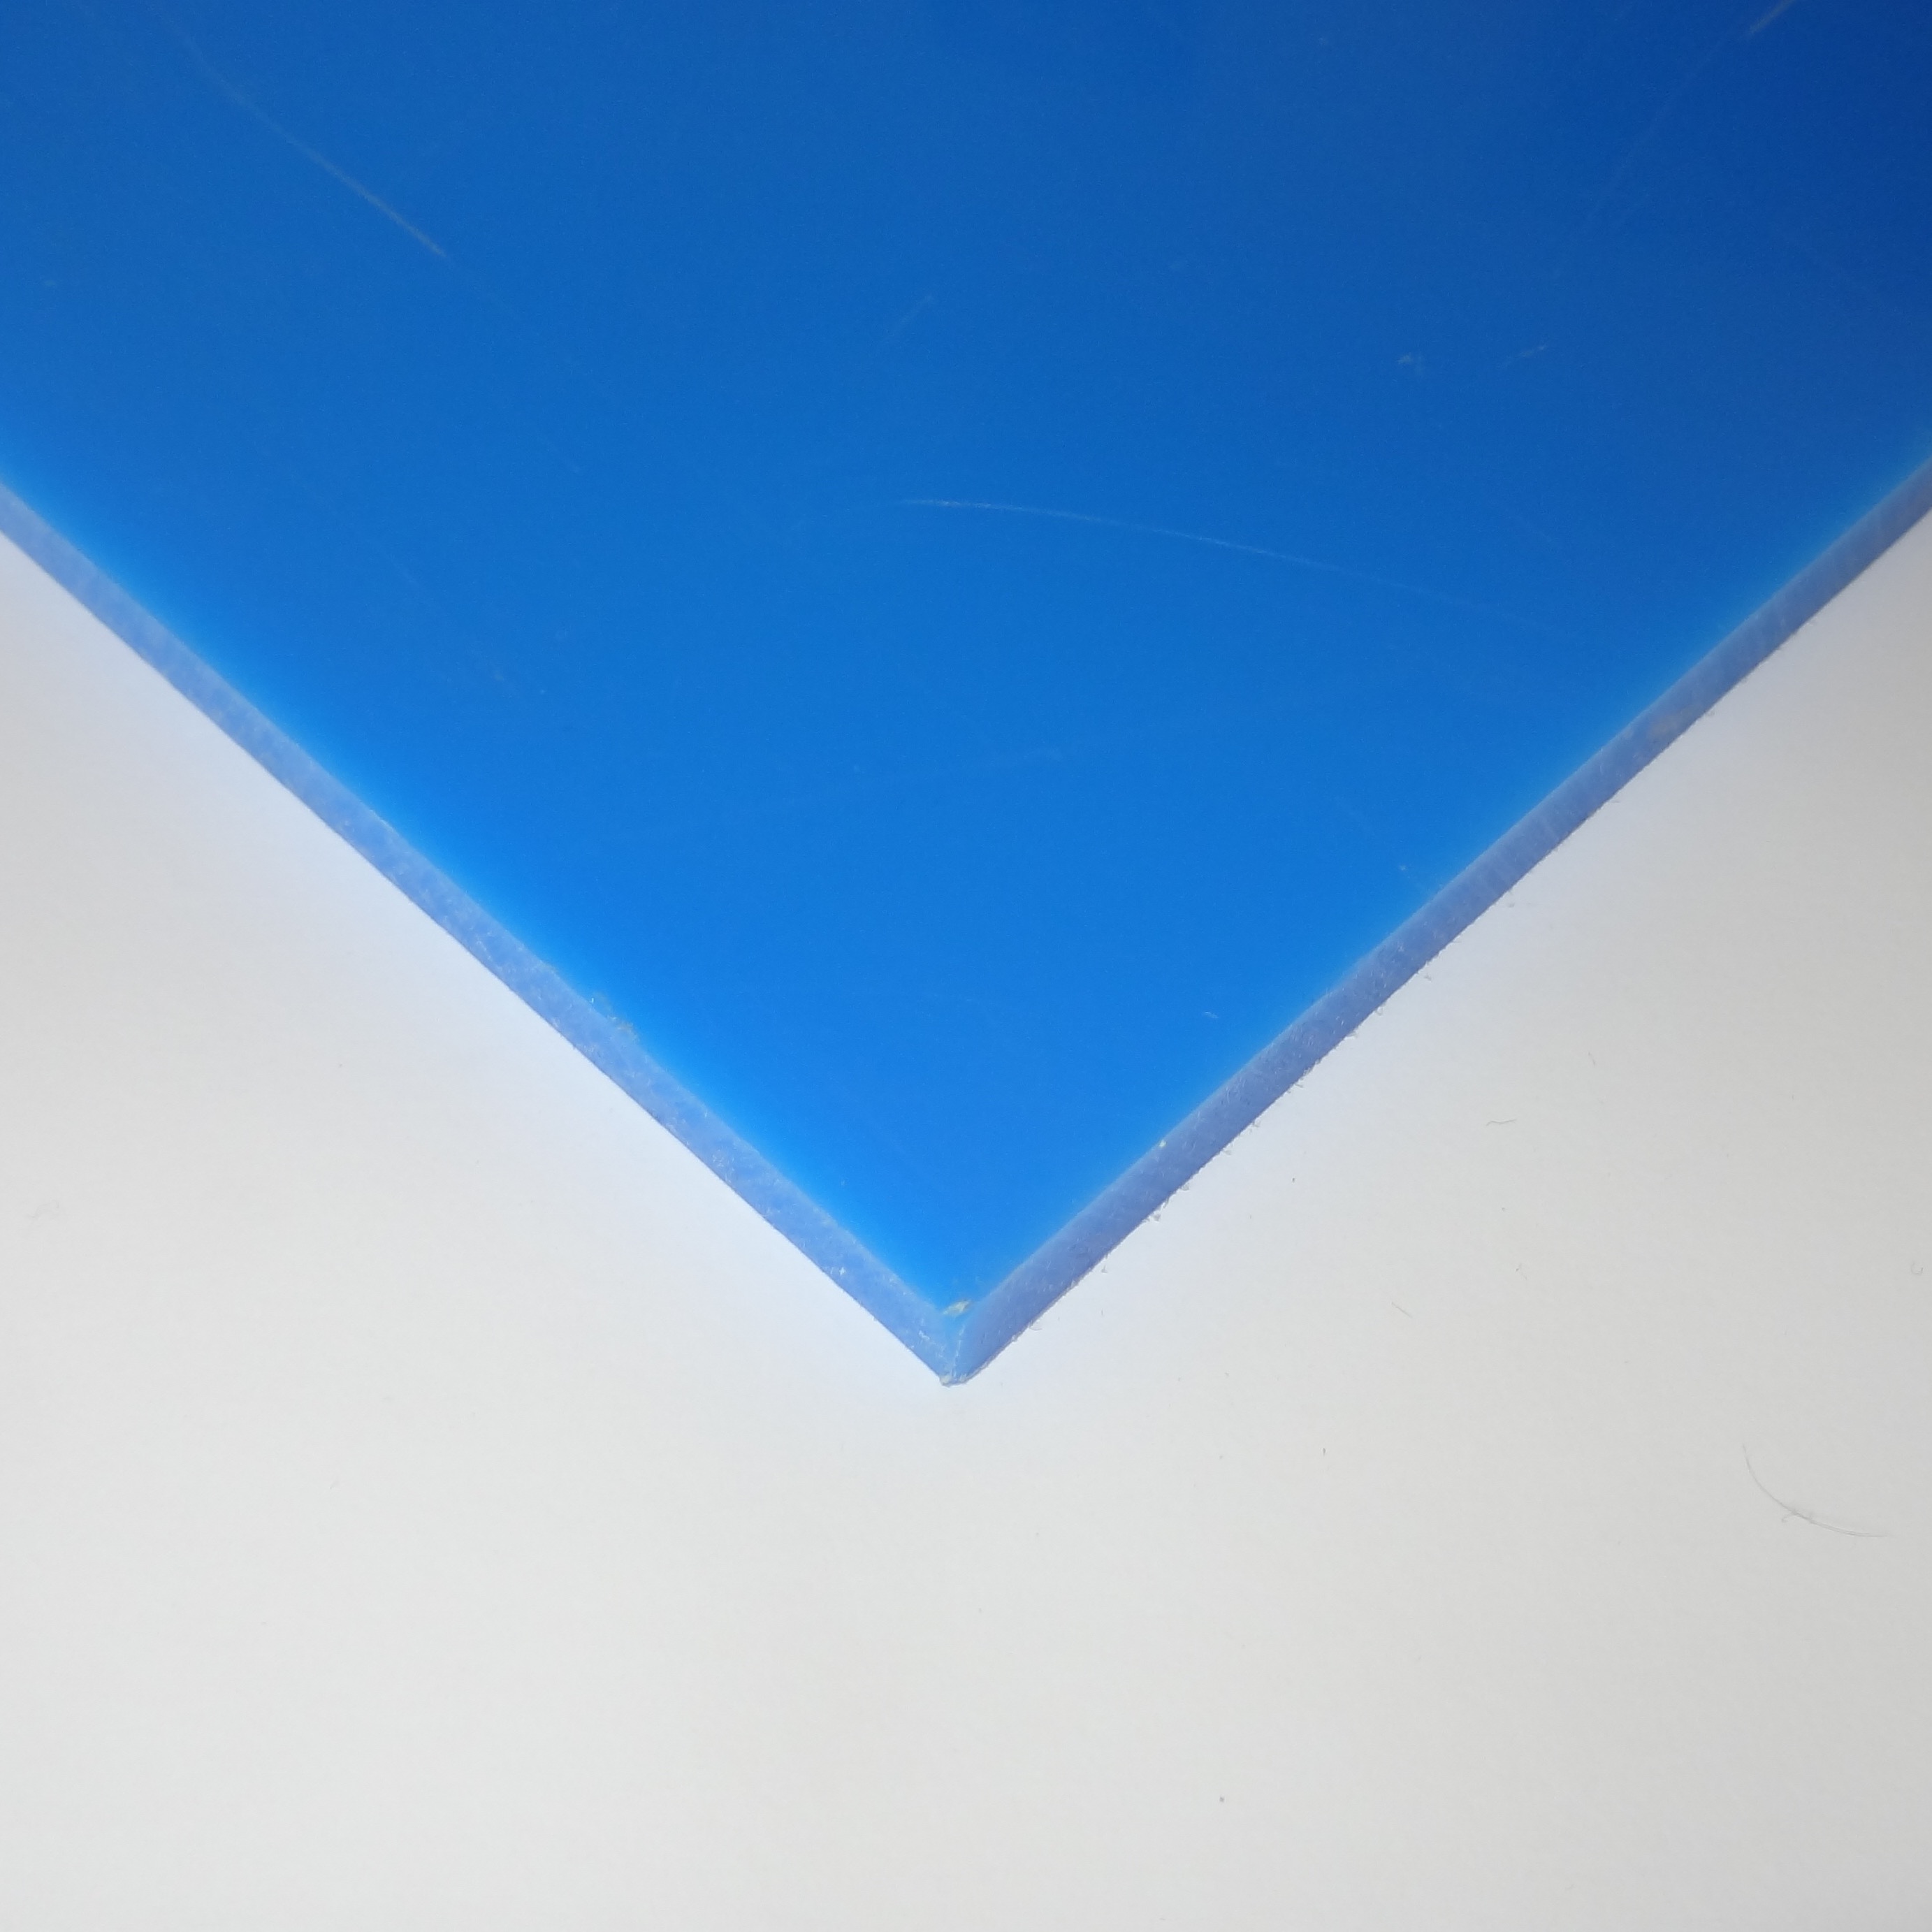 1-1/2" thick NYLATRON® MC 901 Unfilled Cast NYLON Laminate Sheet, blue,  24"W x 48"L sheet